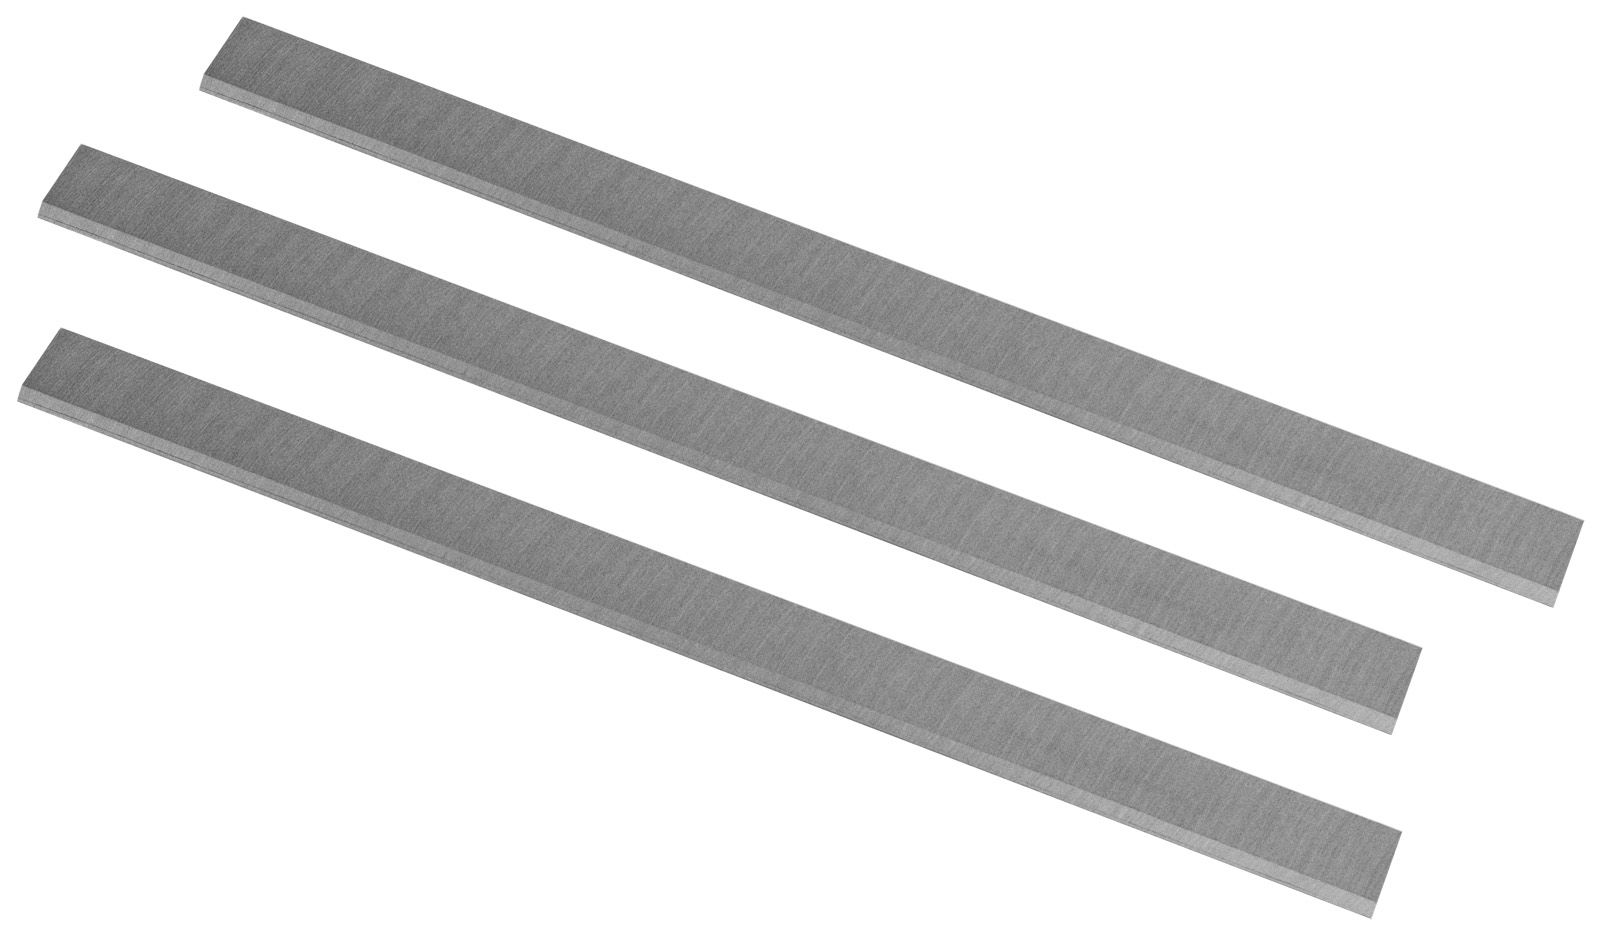 Powertec 128051 Planer Knives 15-Inch x 1-Inch x 1/8-Inch, HSS, Set of 3